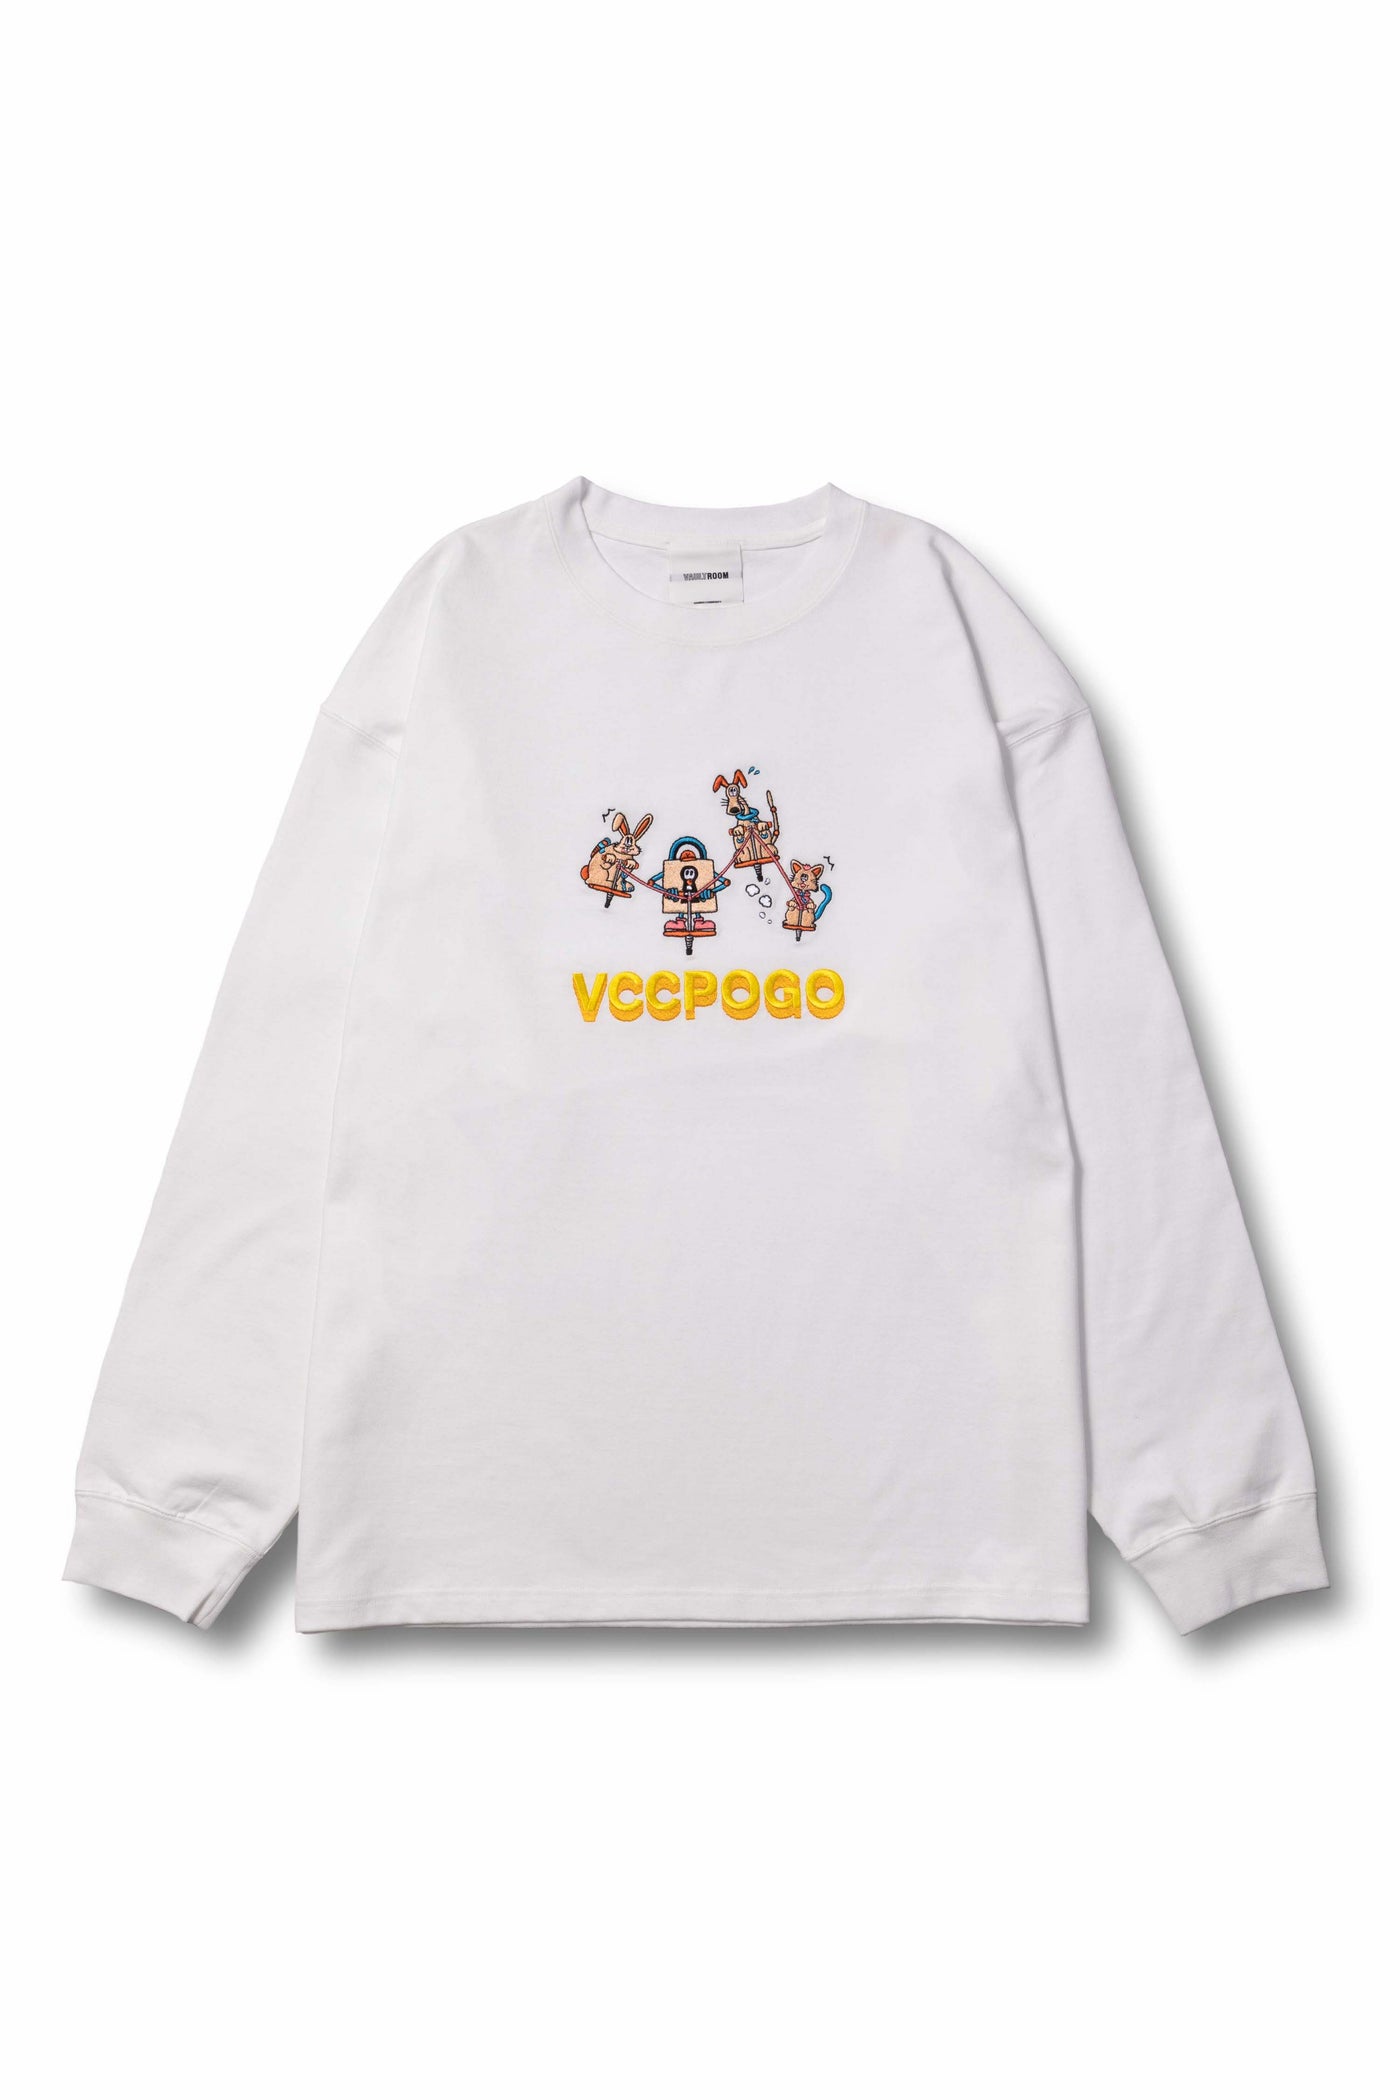 vaultroom AKARIN BIG L/S TEE WHT - Tシャツ/カットソー(七分/長袖)